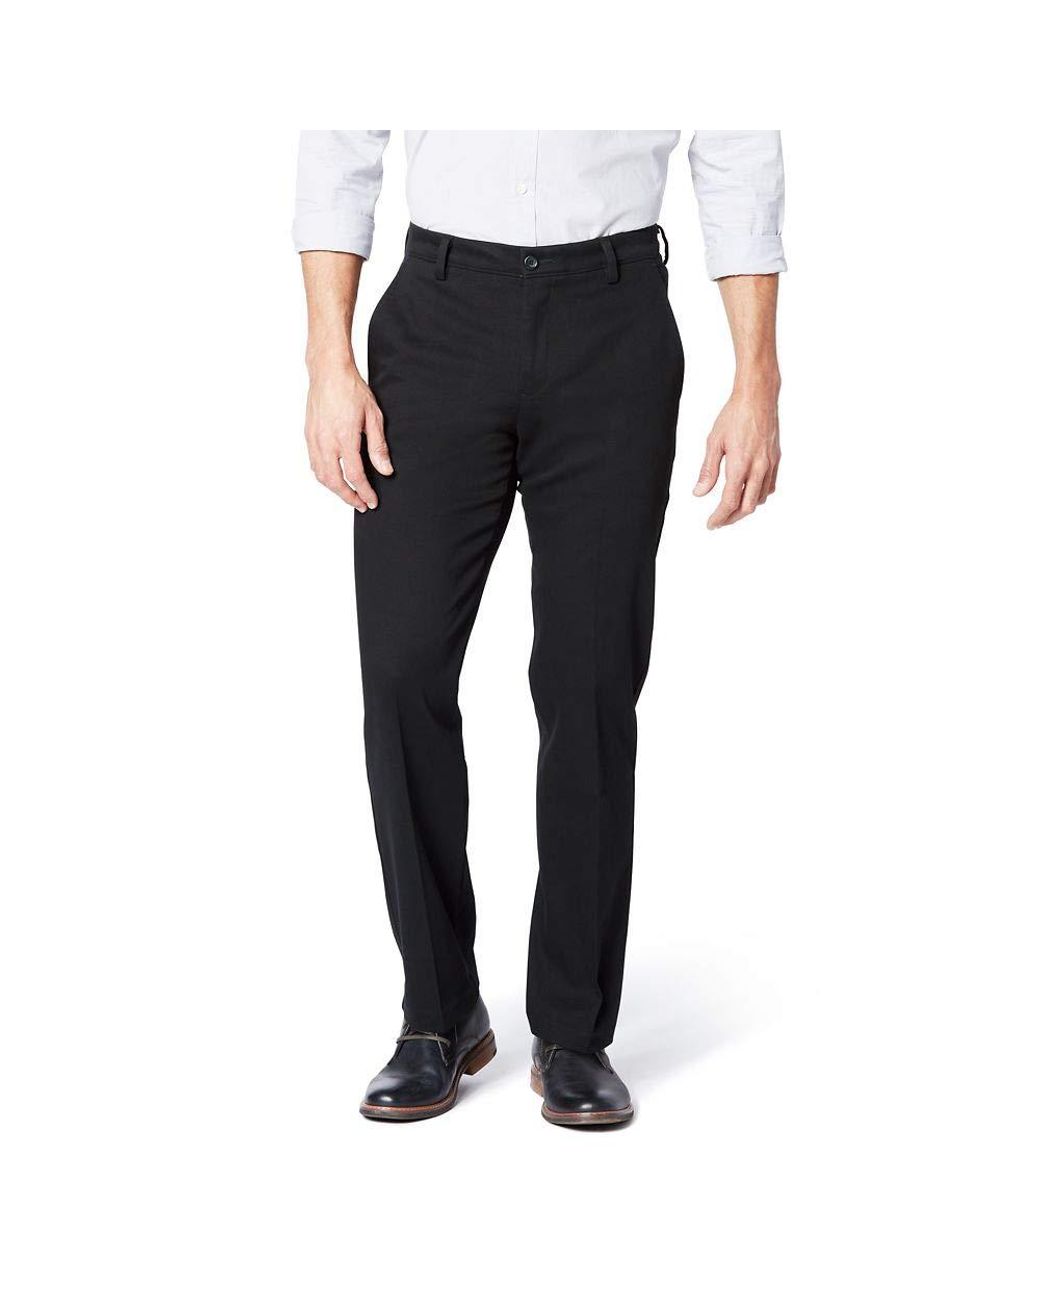 Dockers Slim Fit Workday Khaki Smart 360 Flex Pants in Black for Men - Lyst